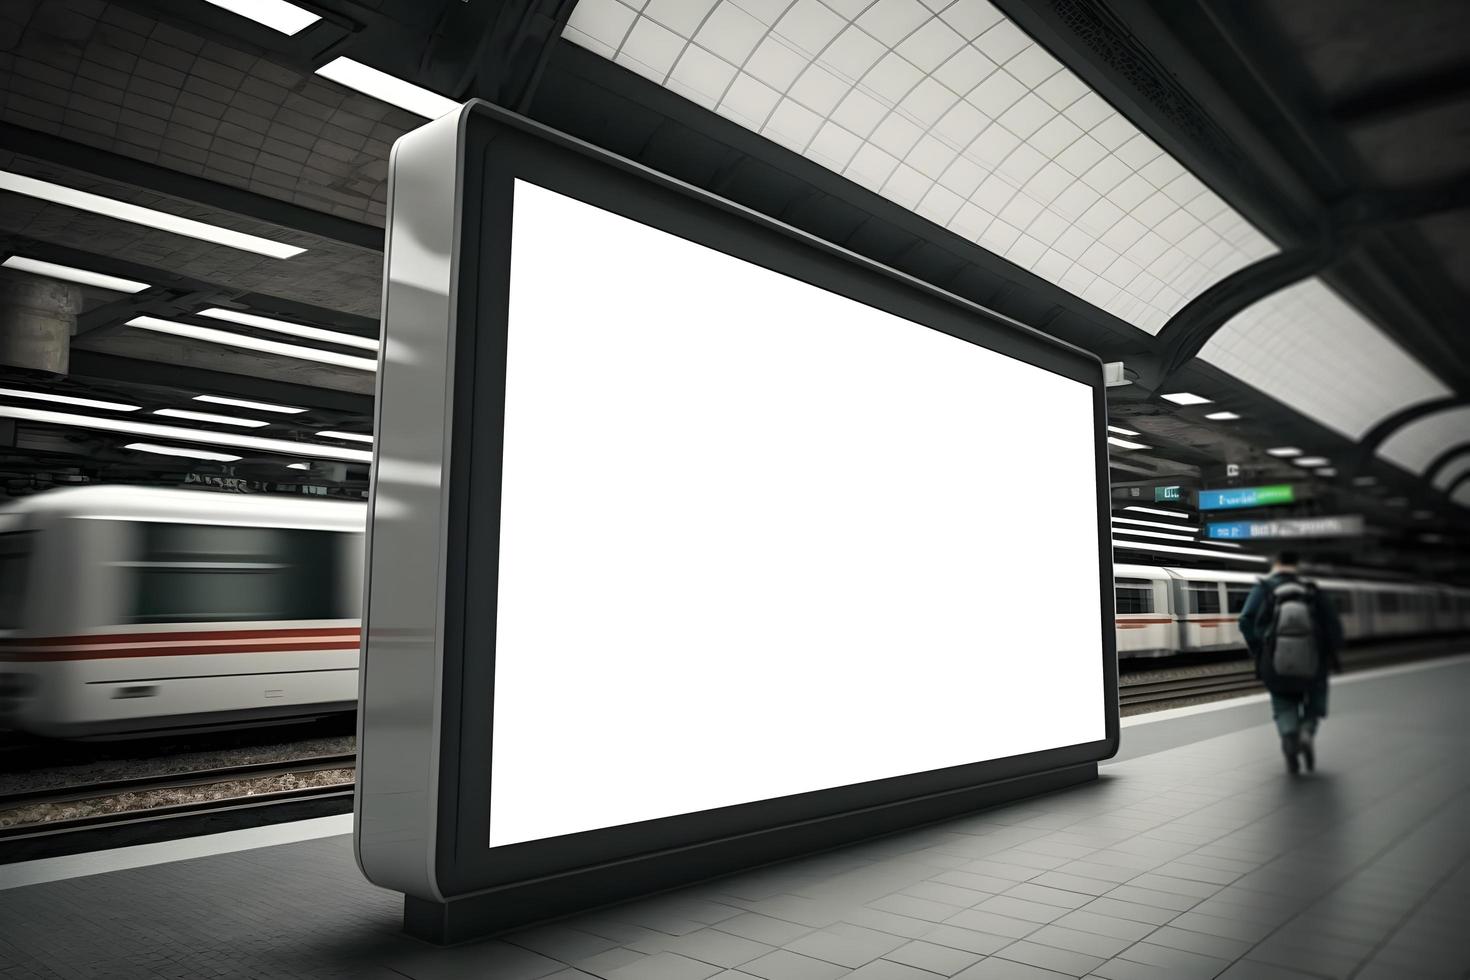 leeren horizontal Plakatwand beim unter Tage U-Bahn , Metro Bahnhof, Werbung Plakatwand unter Tage foto